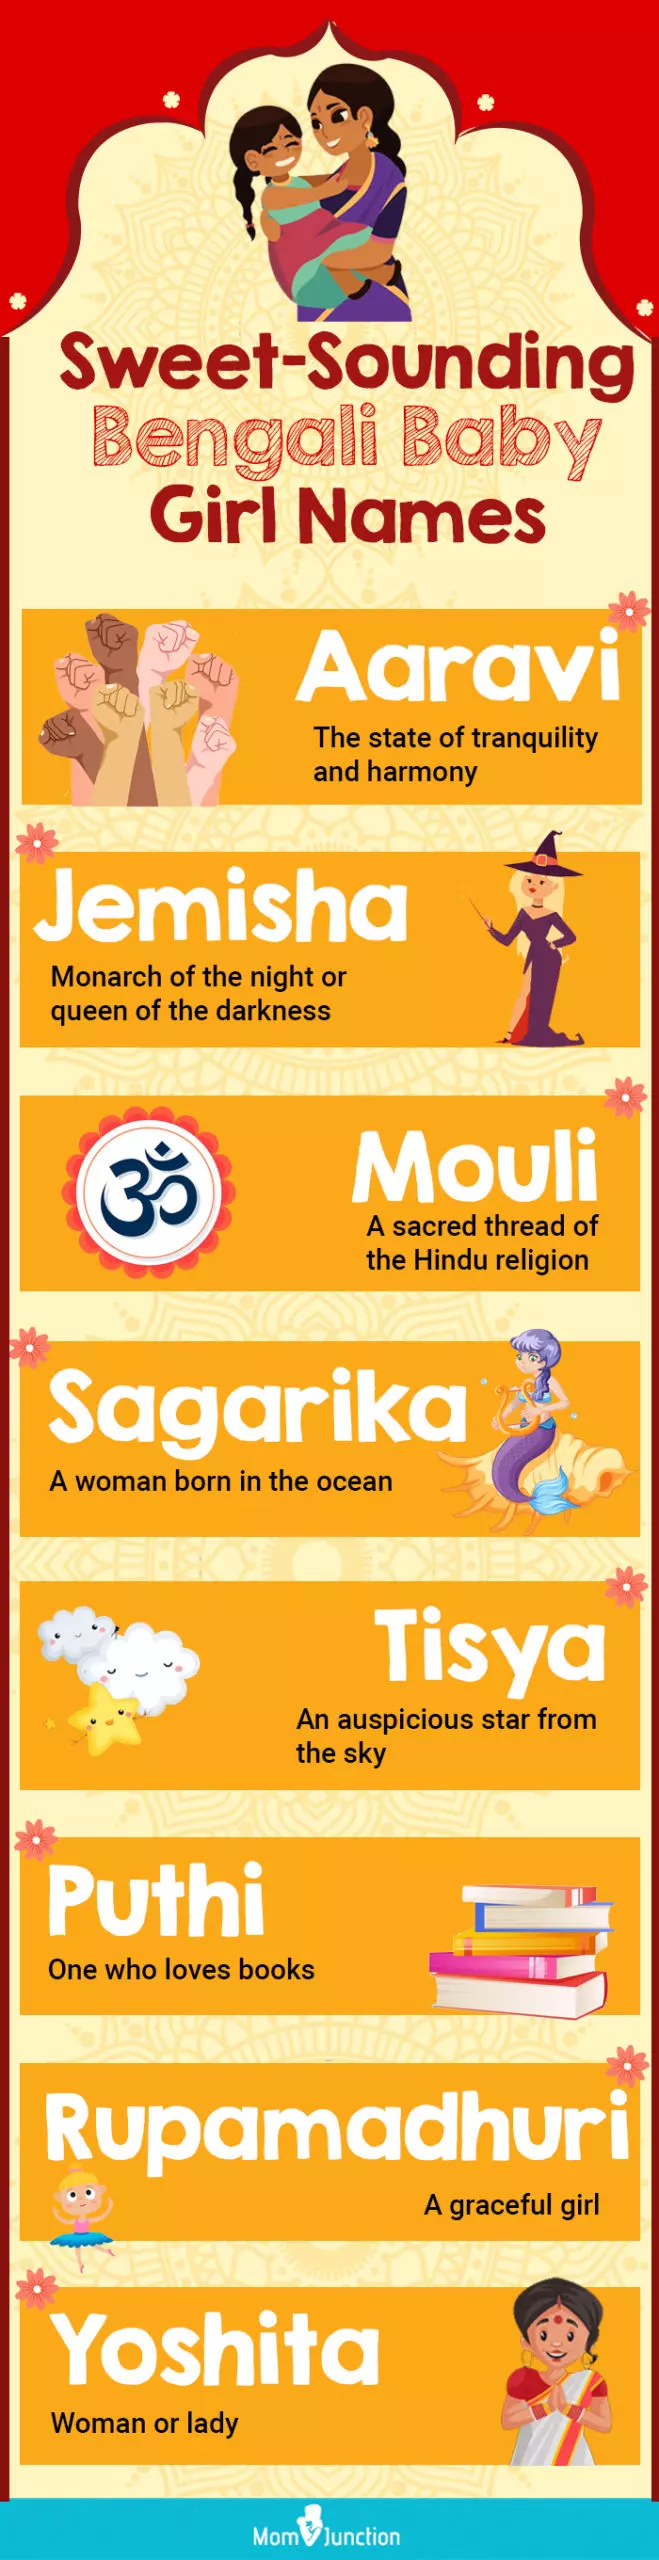 sweet sounding bengali baby girl names (infographic)